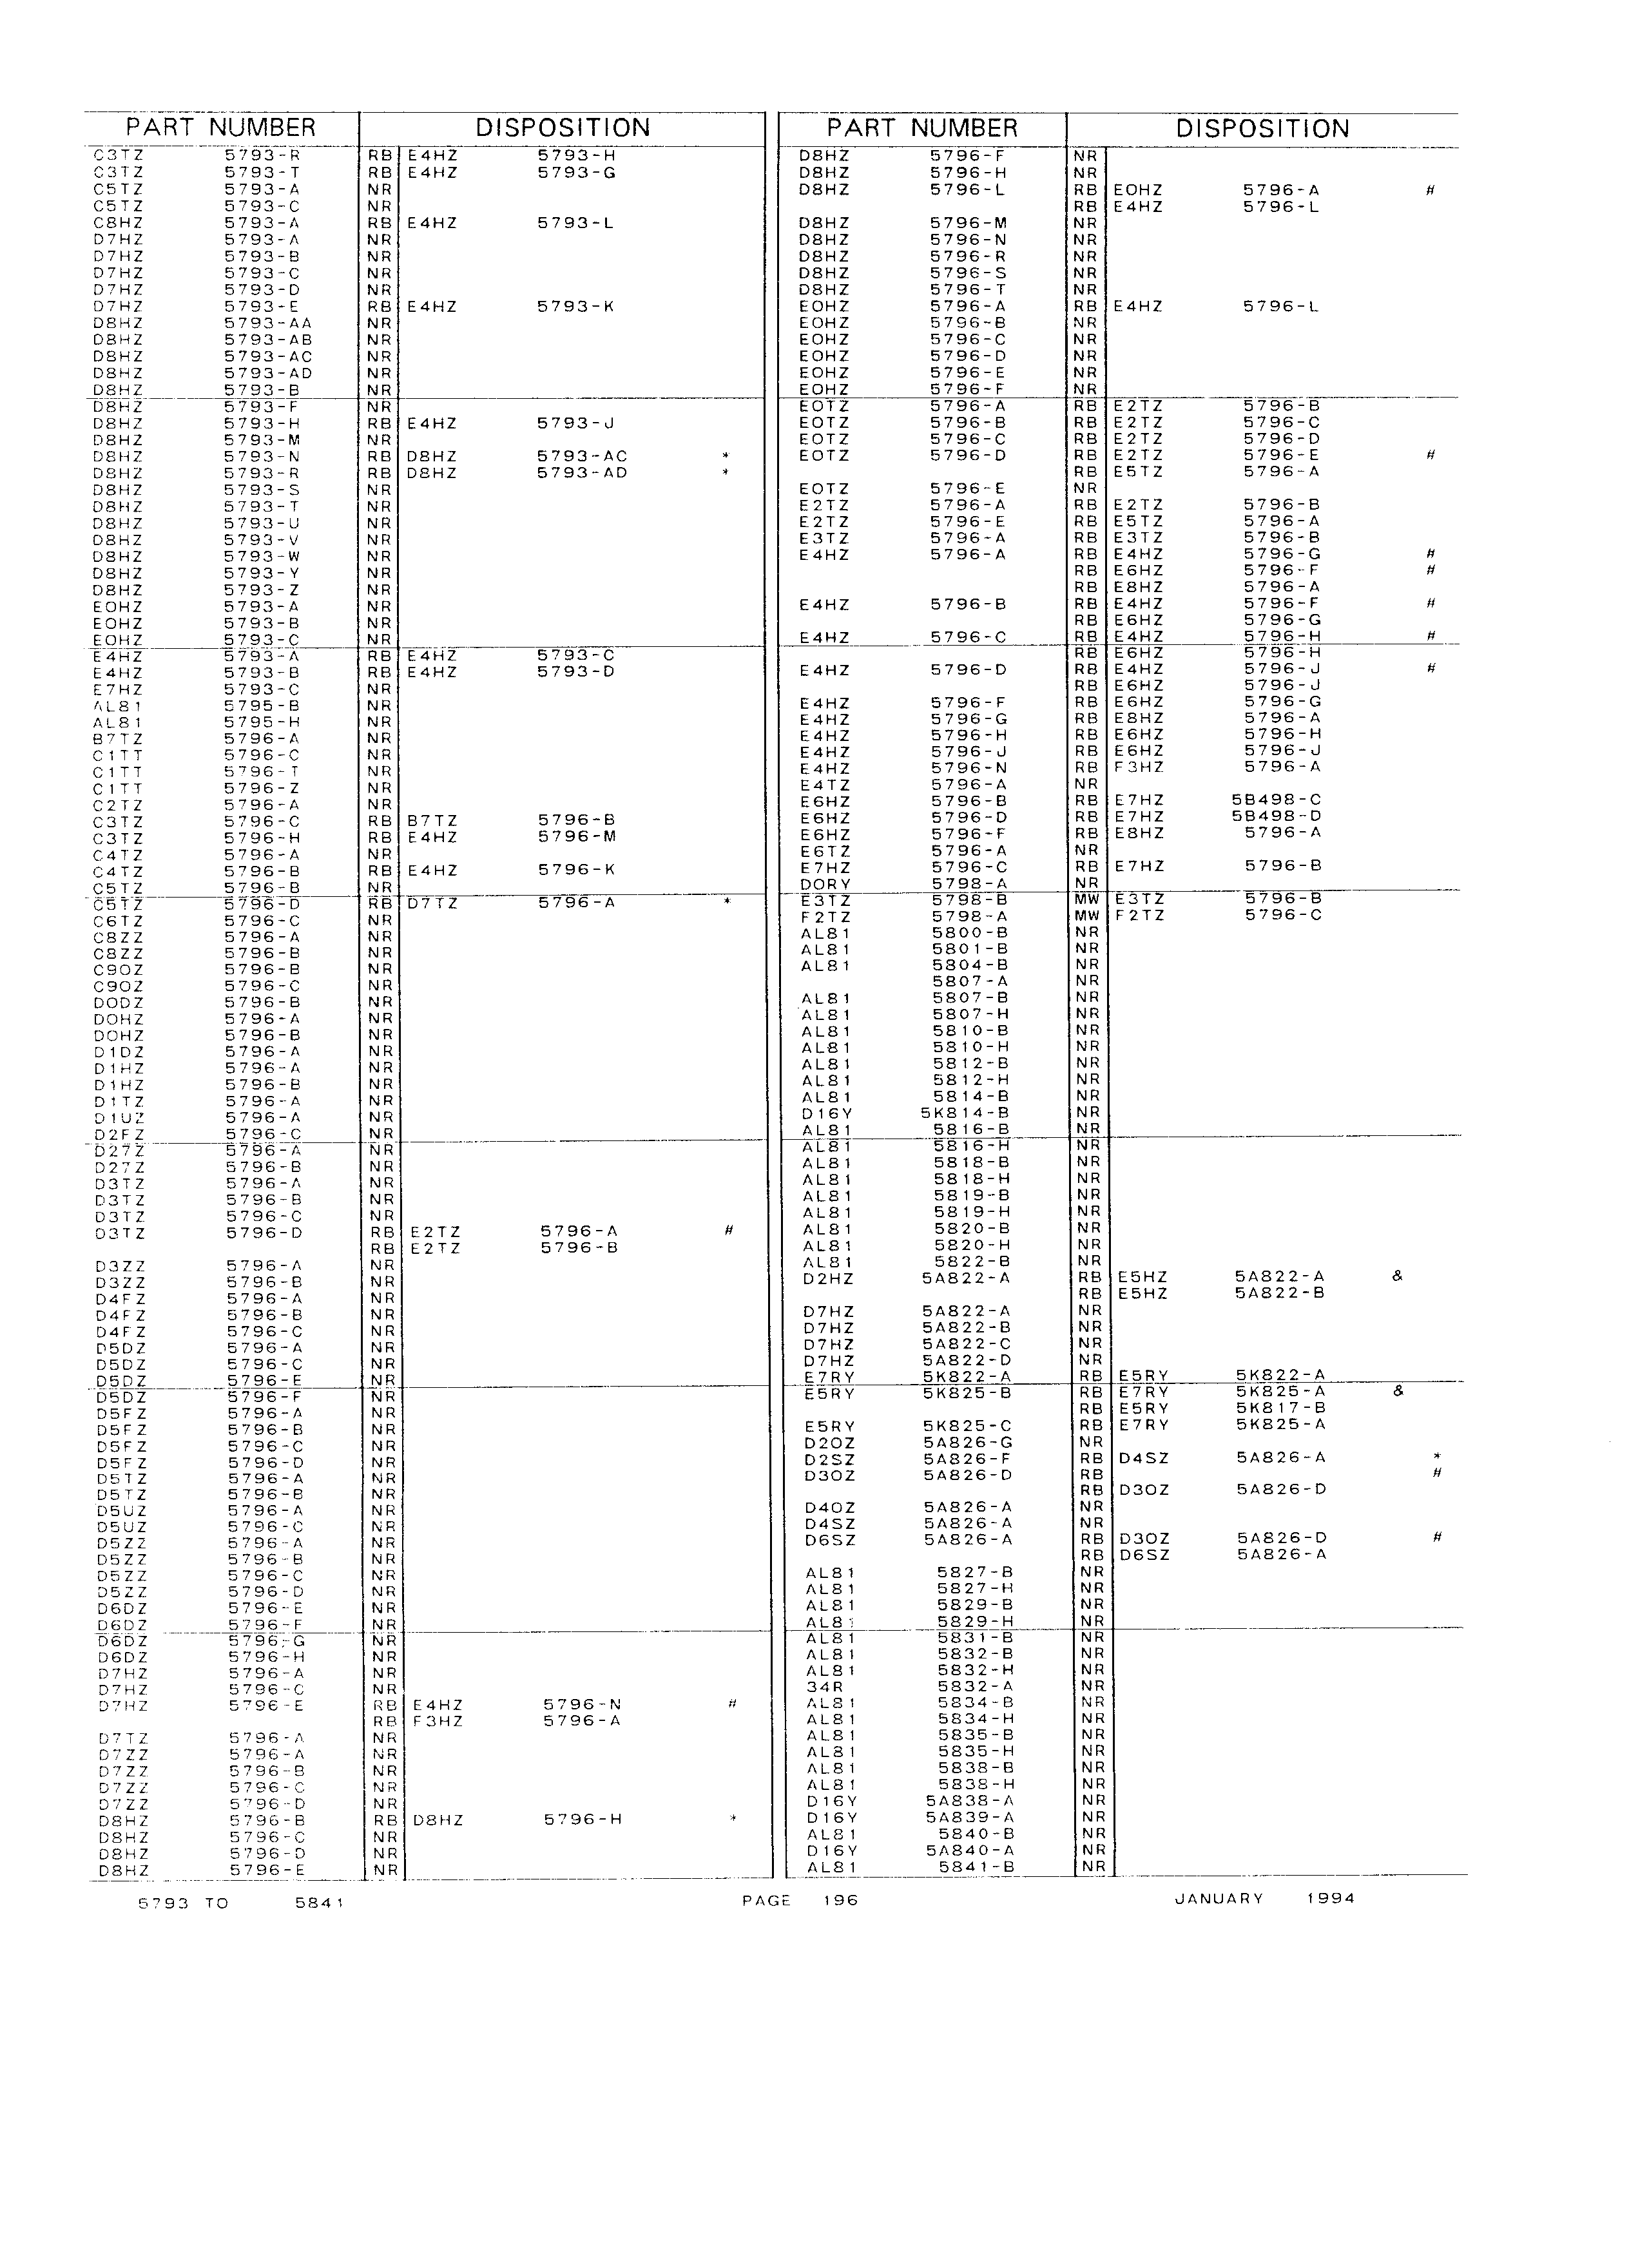 Obsolete - Supercede - Interchange Manual FPS 7632-5 January 1994